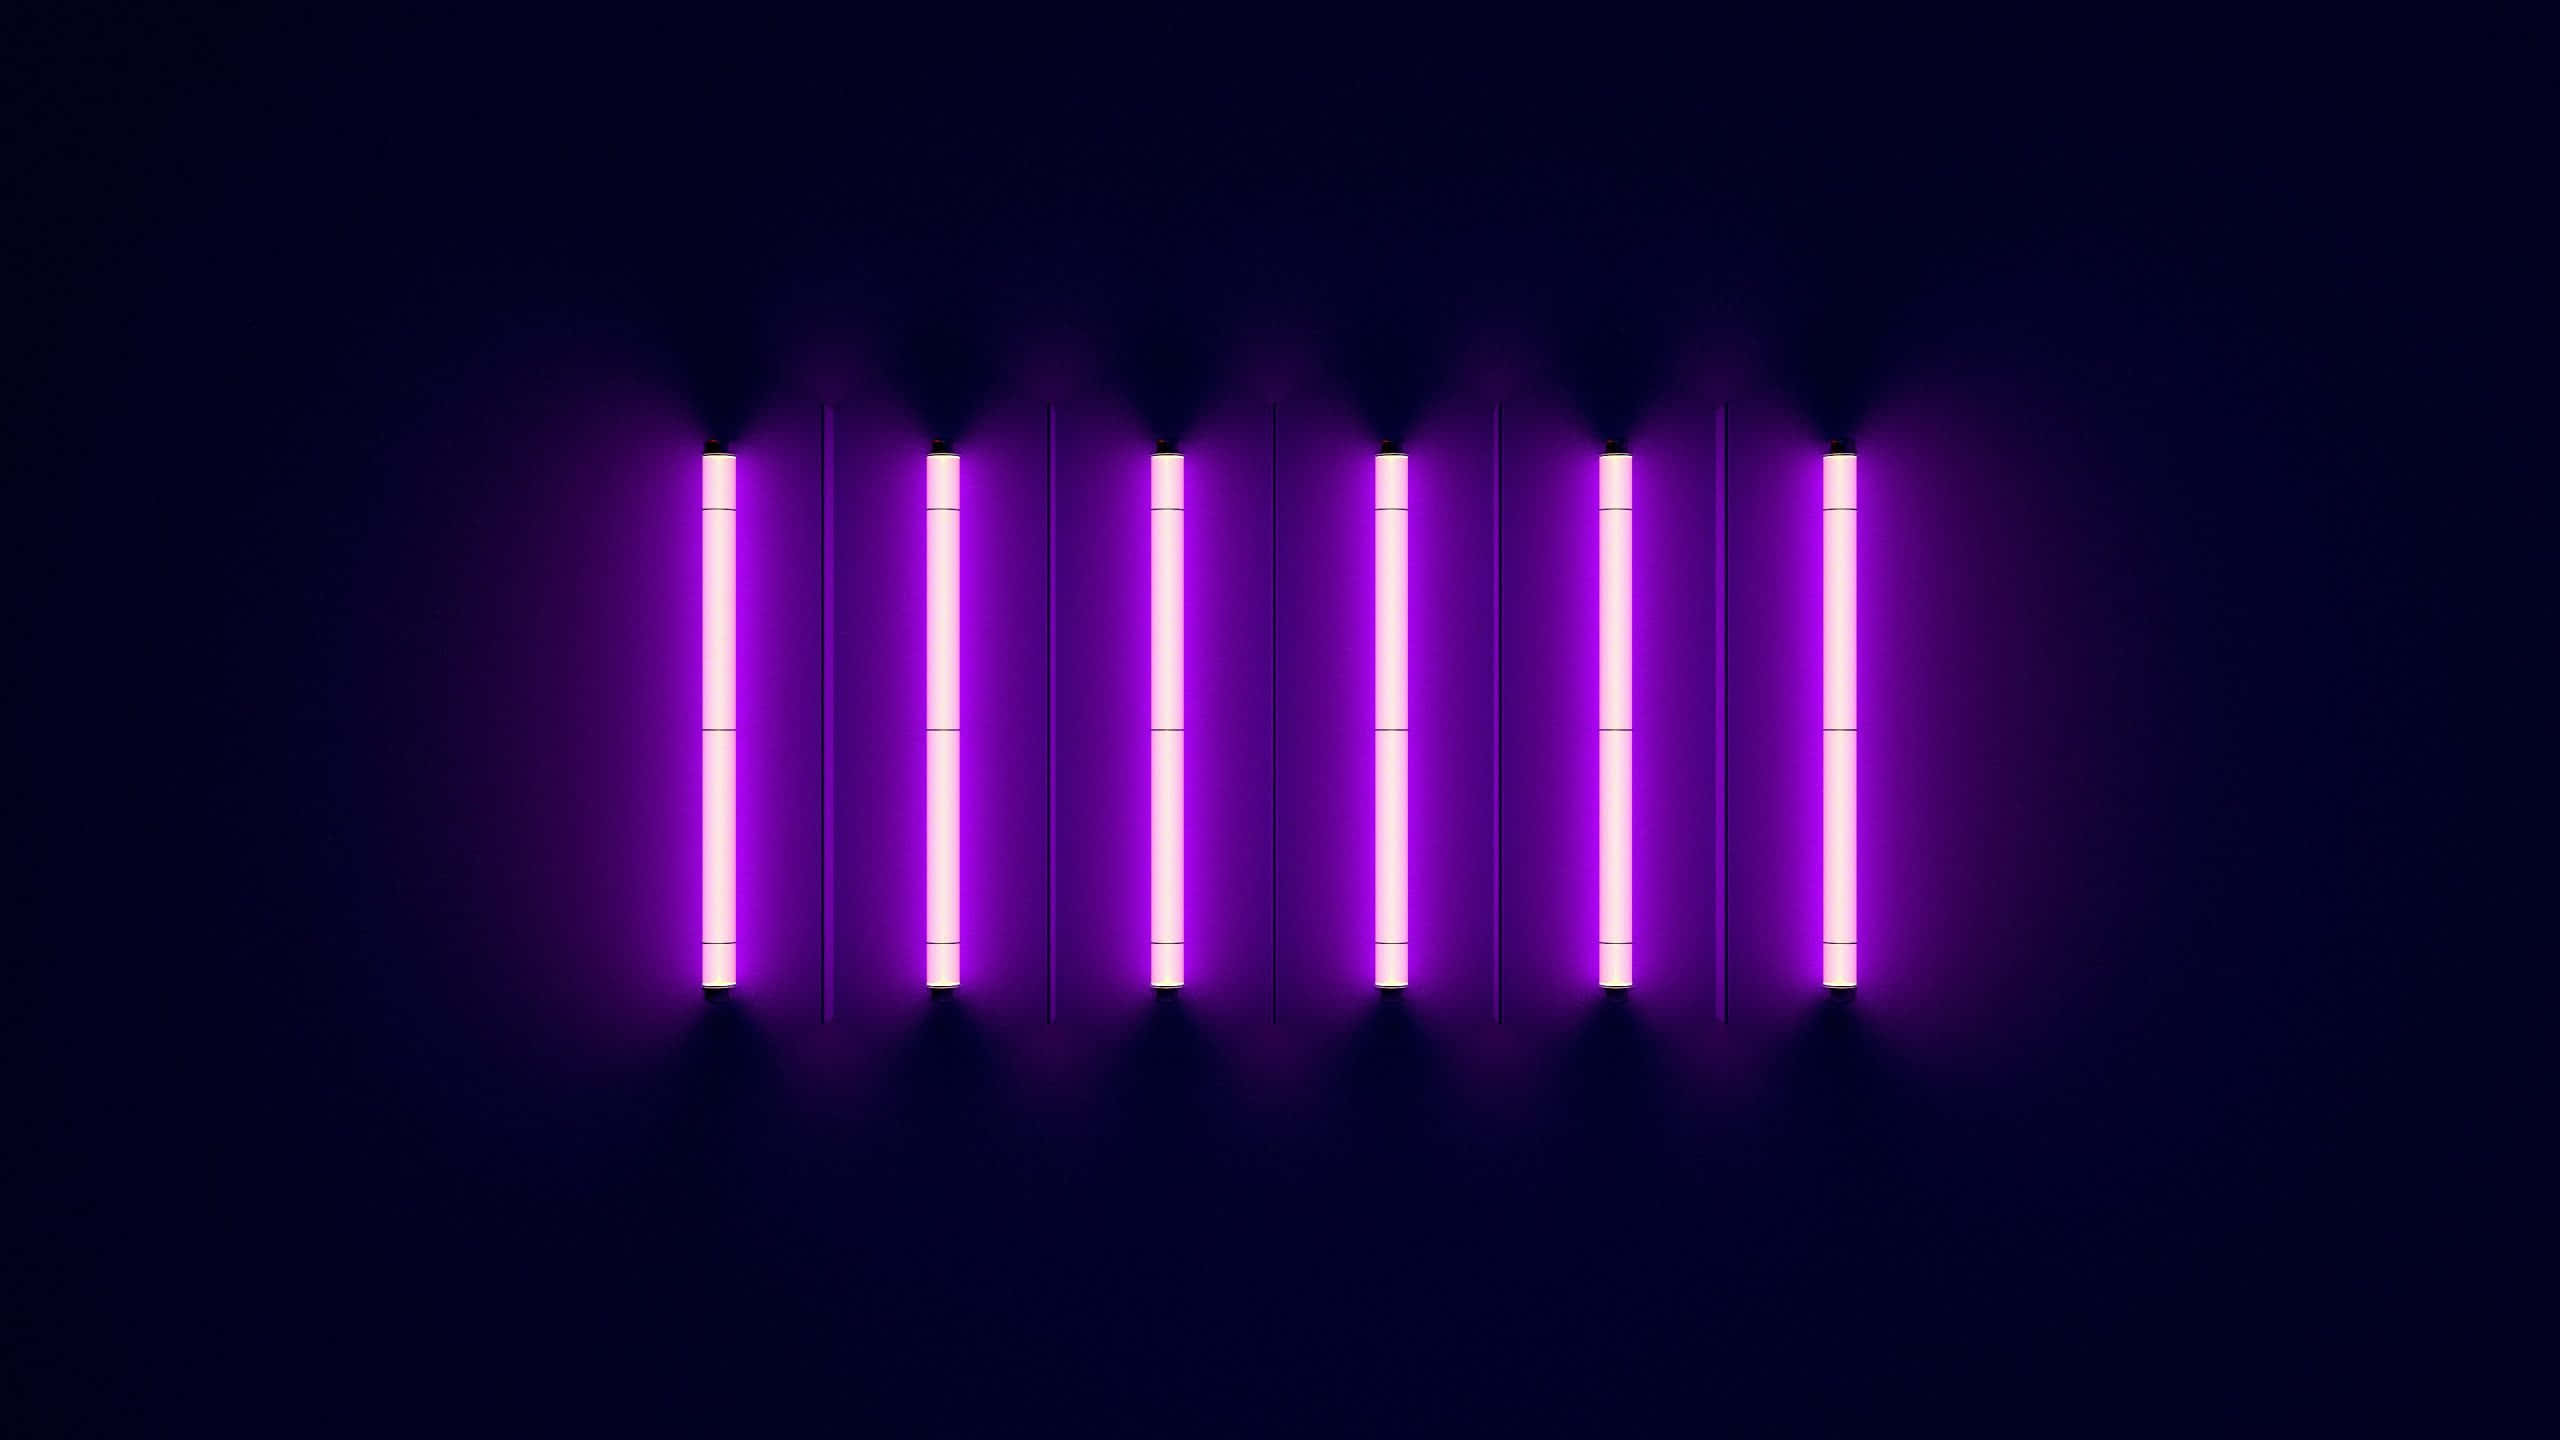 A Purple Light Is Shown On A Dark Background